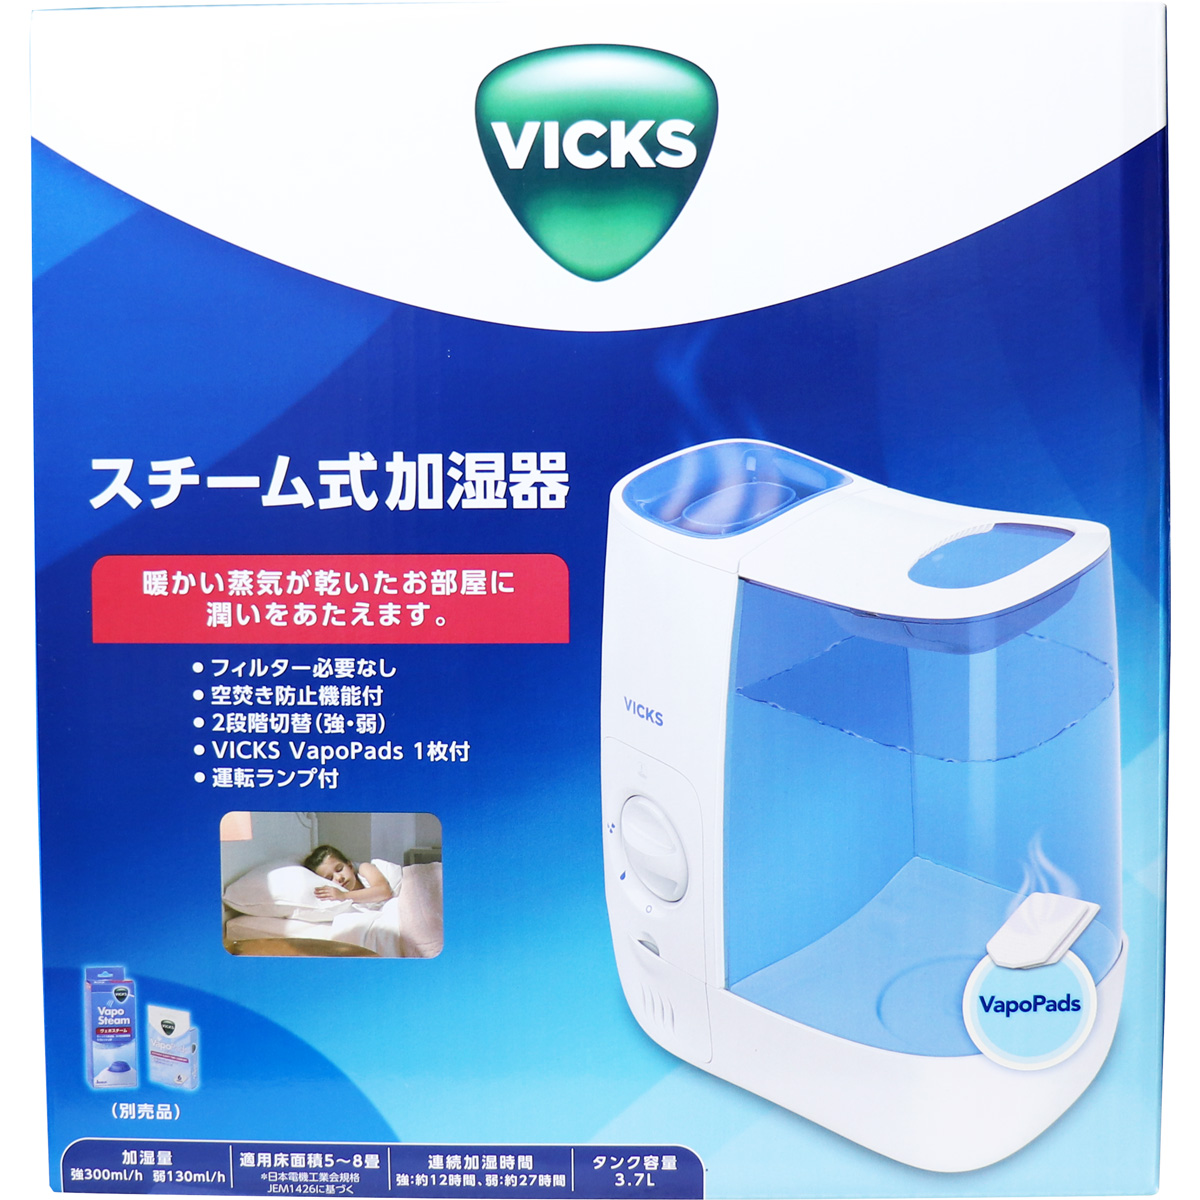 VICKS スチーム式加湿器とアロマ液2本のセット - 空調